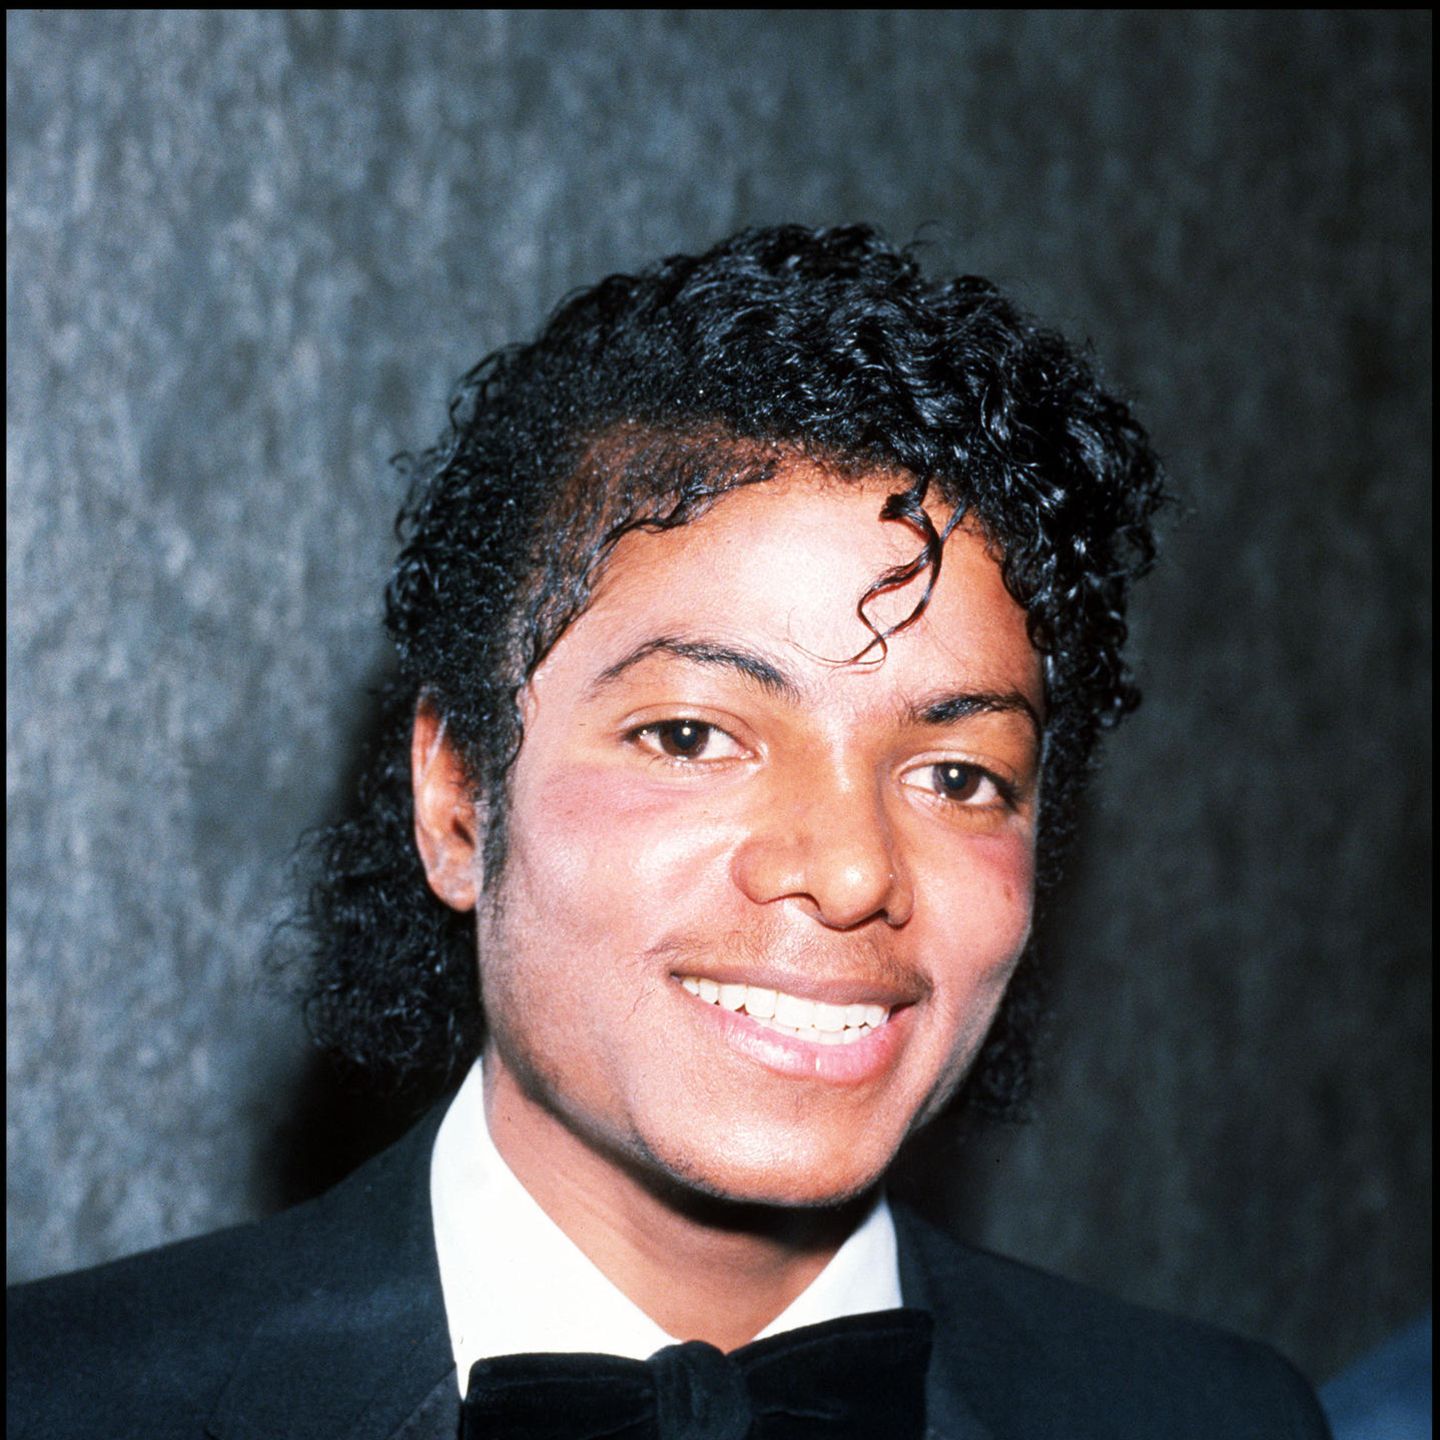 Eine Haut wie Michael Jackson: Vitiligo | BRIGITTE.de